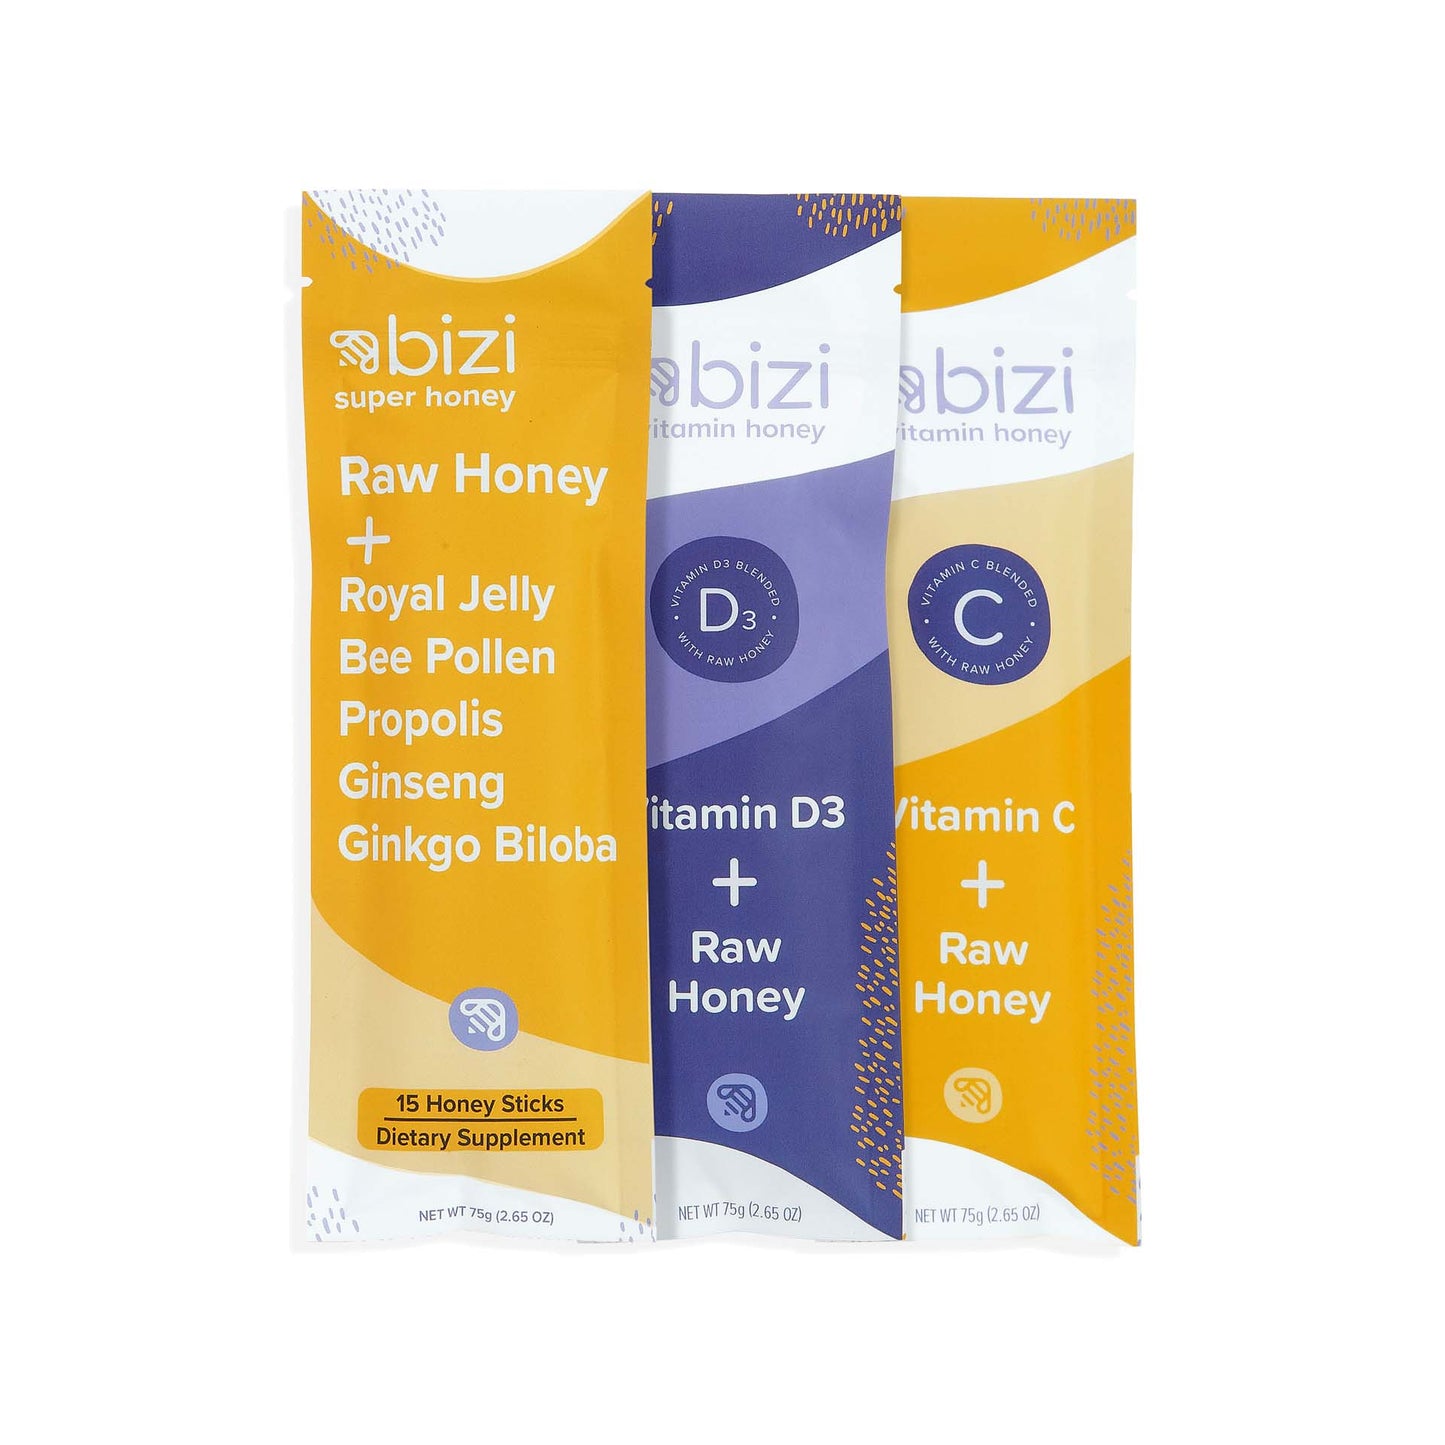 Bizi Variety Pack by Bizi Vitamin Honey Leaves of Leisure